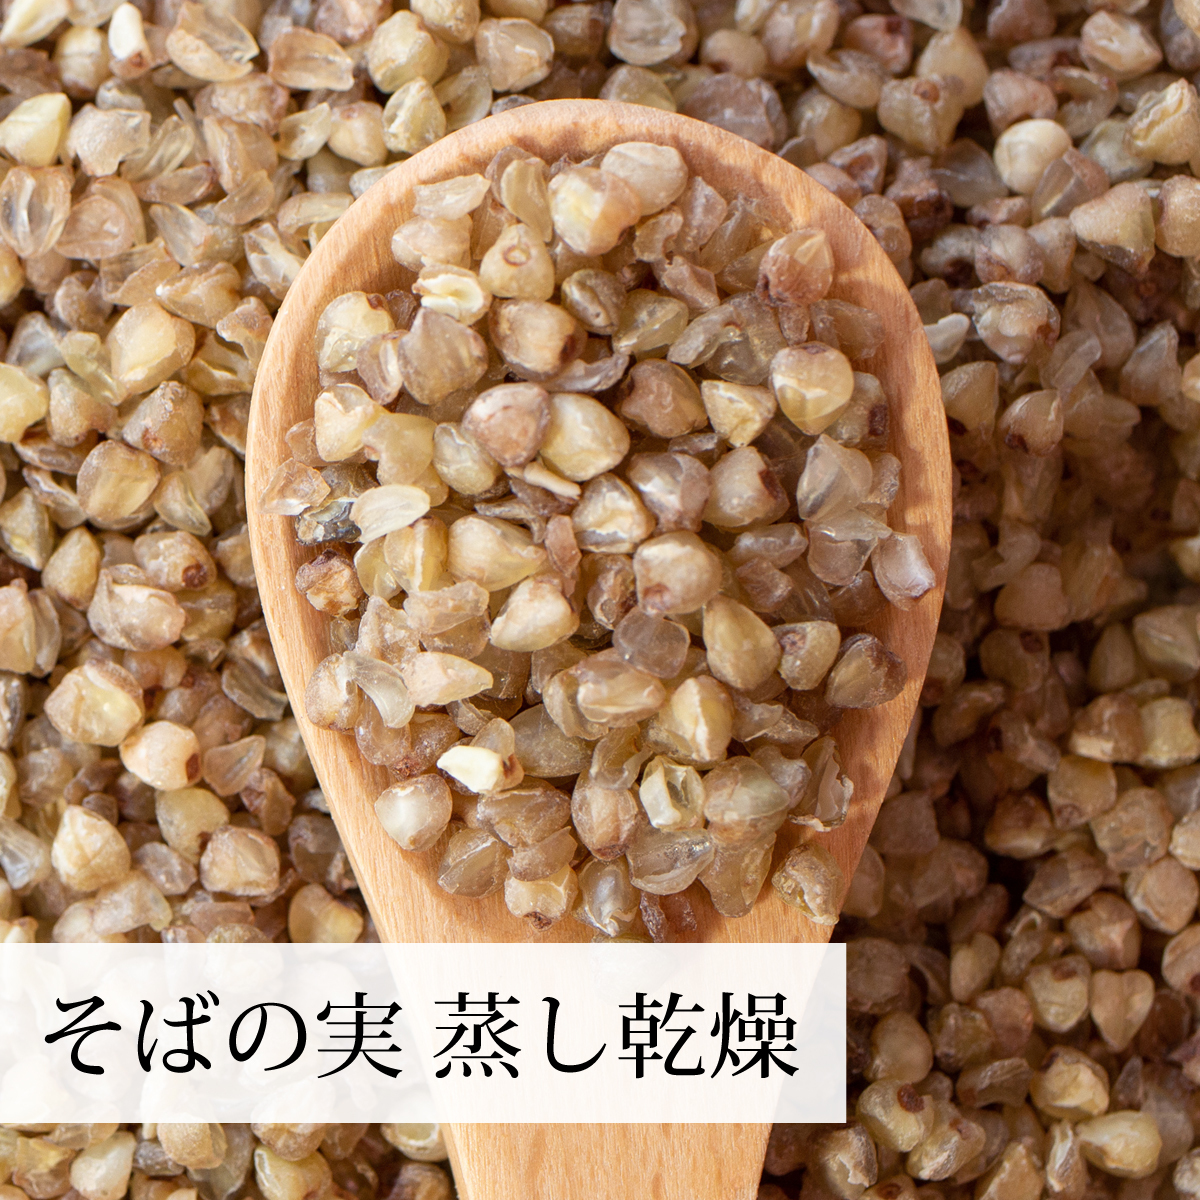  buckwheat's seed 1kg×4 piece soba. real soba rice soba. real nki real .. real business use 